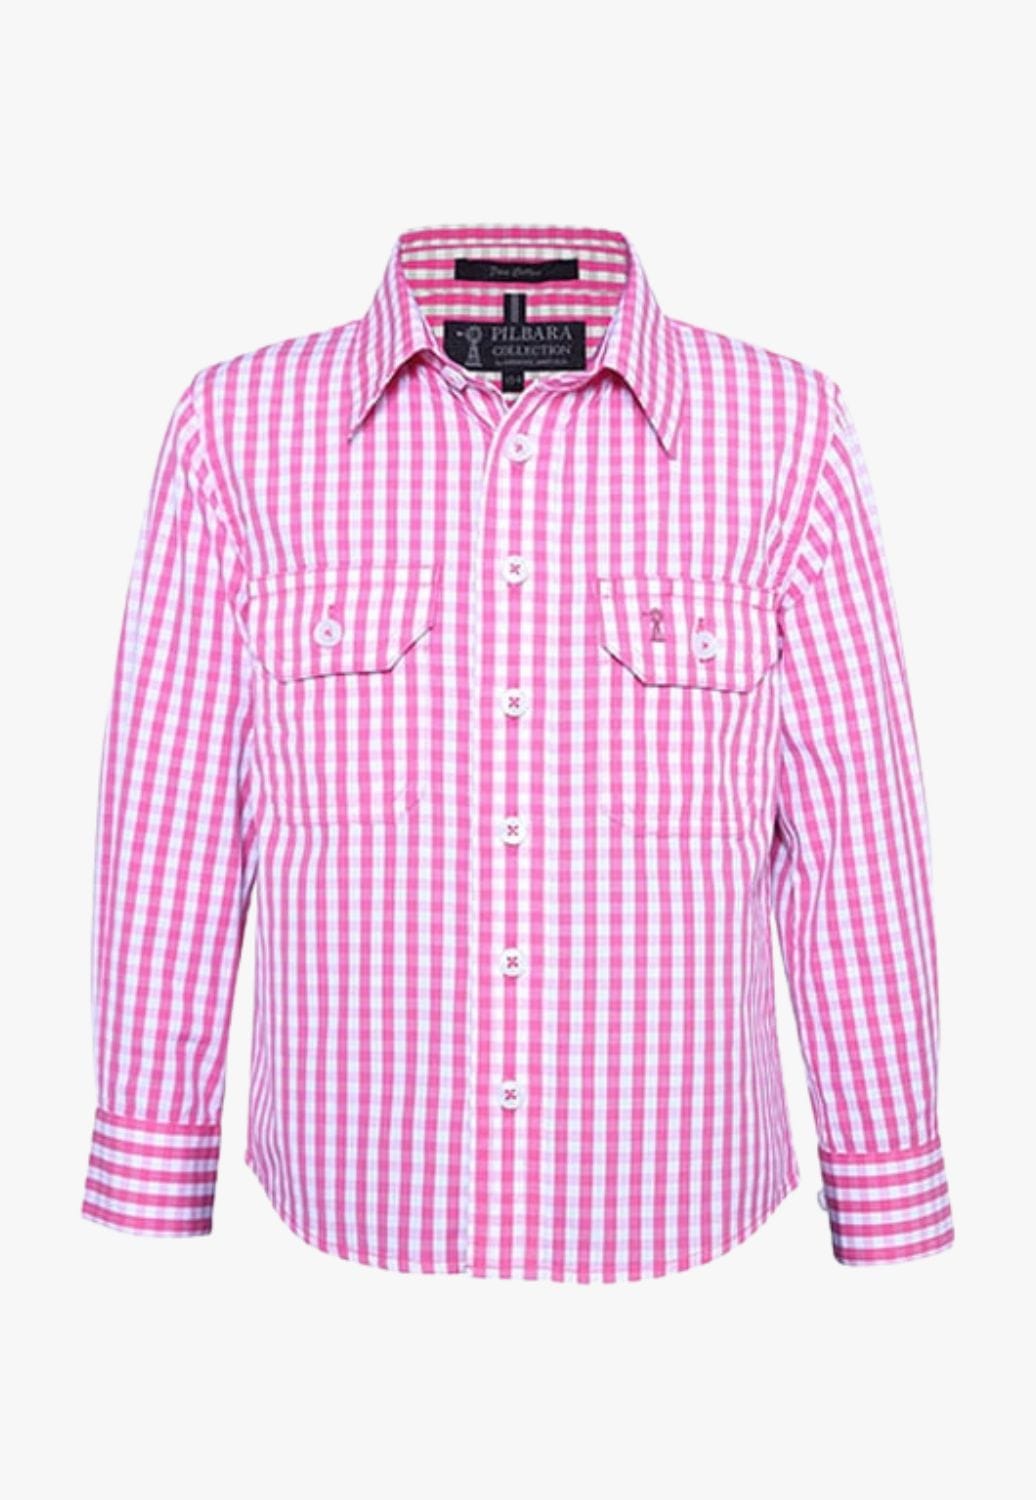 Pilbara CLOTHING-Boys Long Sleeve Shirts Ritemate Kids Long Sleeve Check Shirt